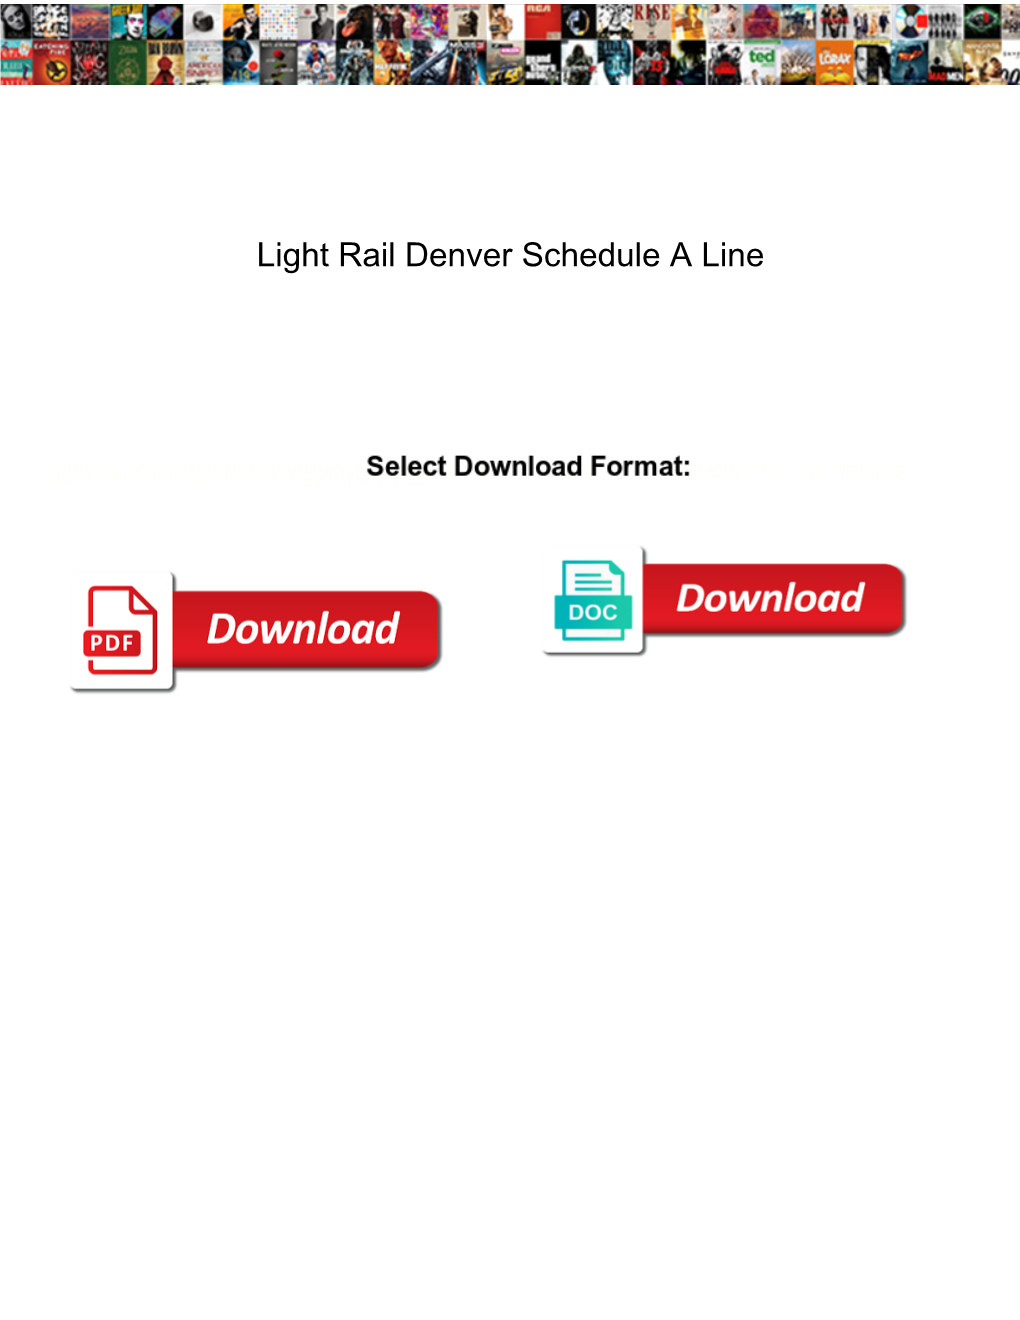 Light Rail Denver Schedule a Line